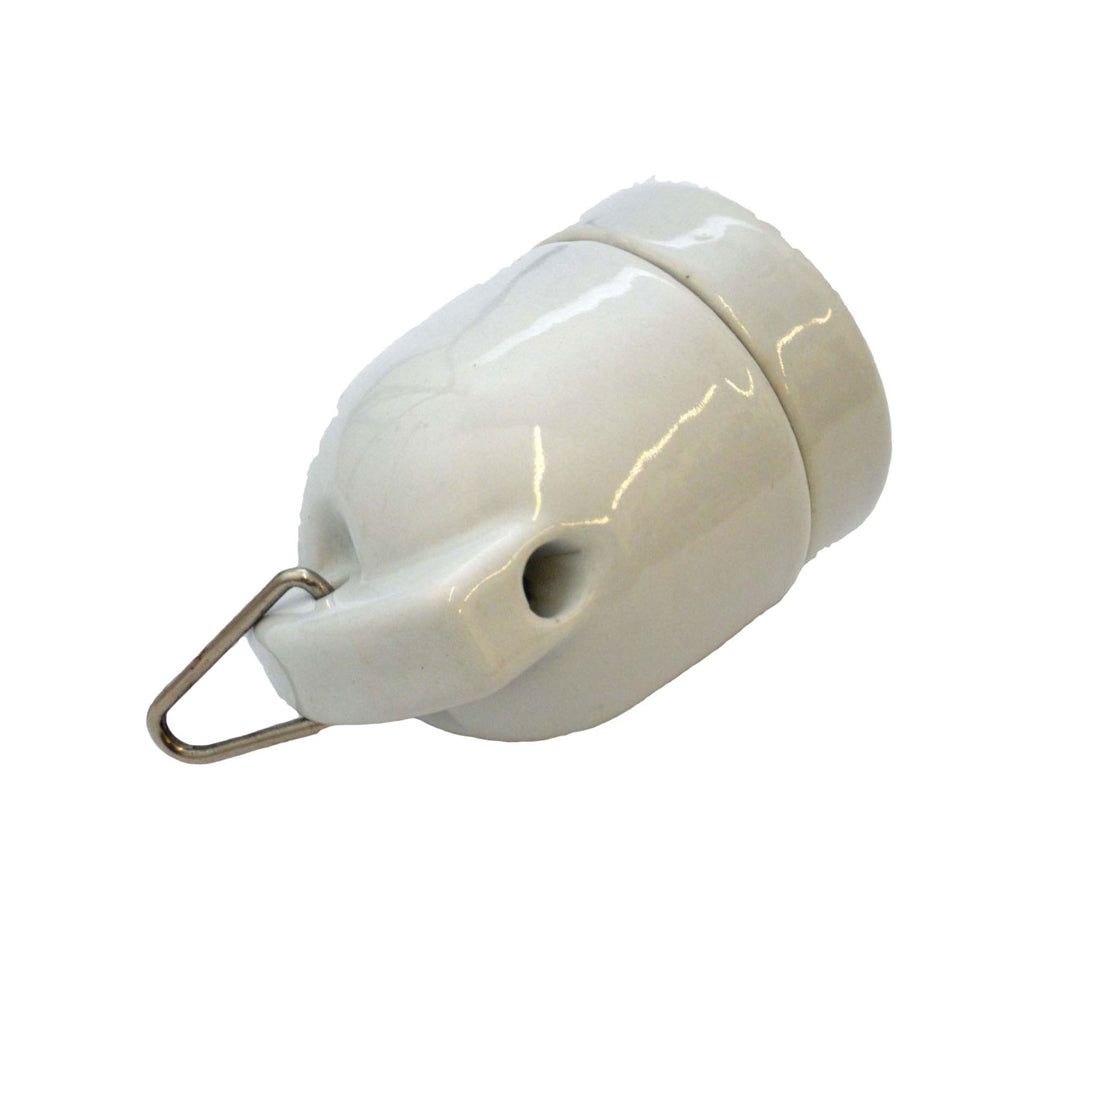 Reptile Ceramic Bulb Holder - Hanging Type Bulk Buy x12